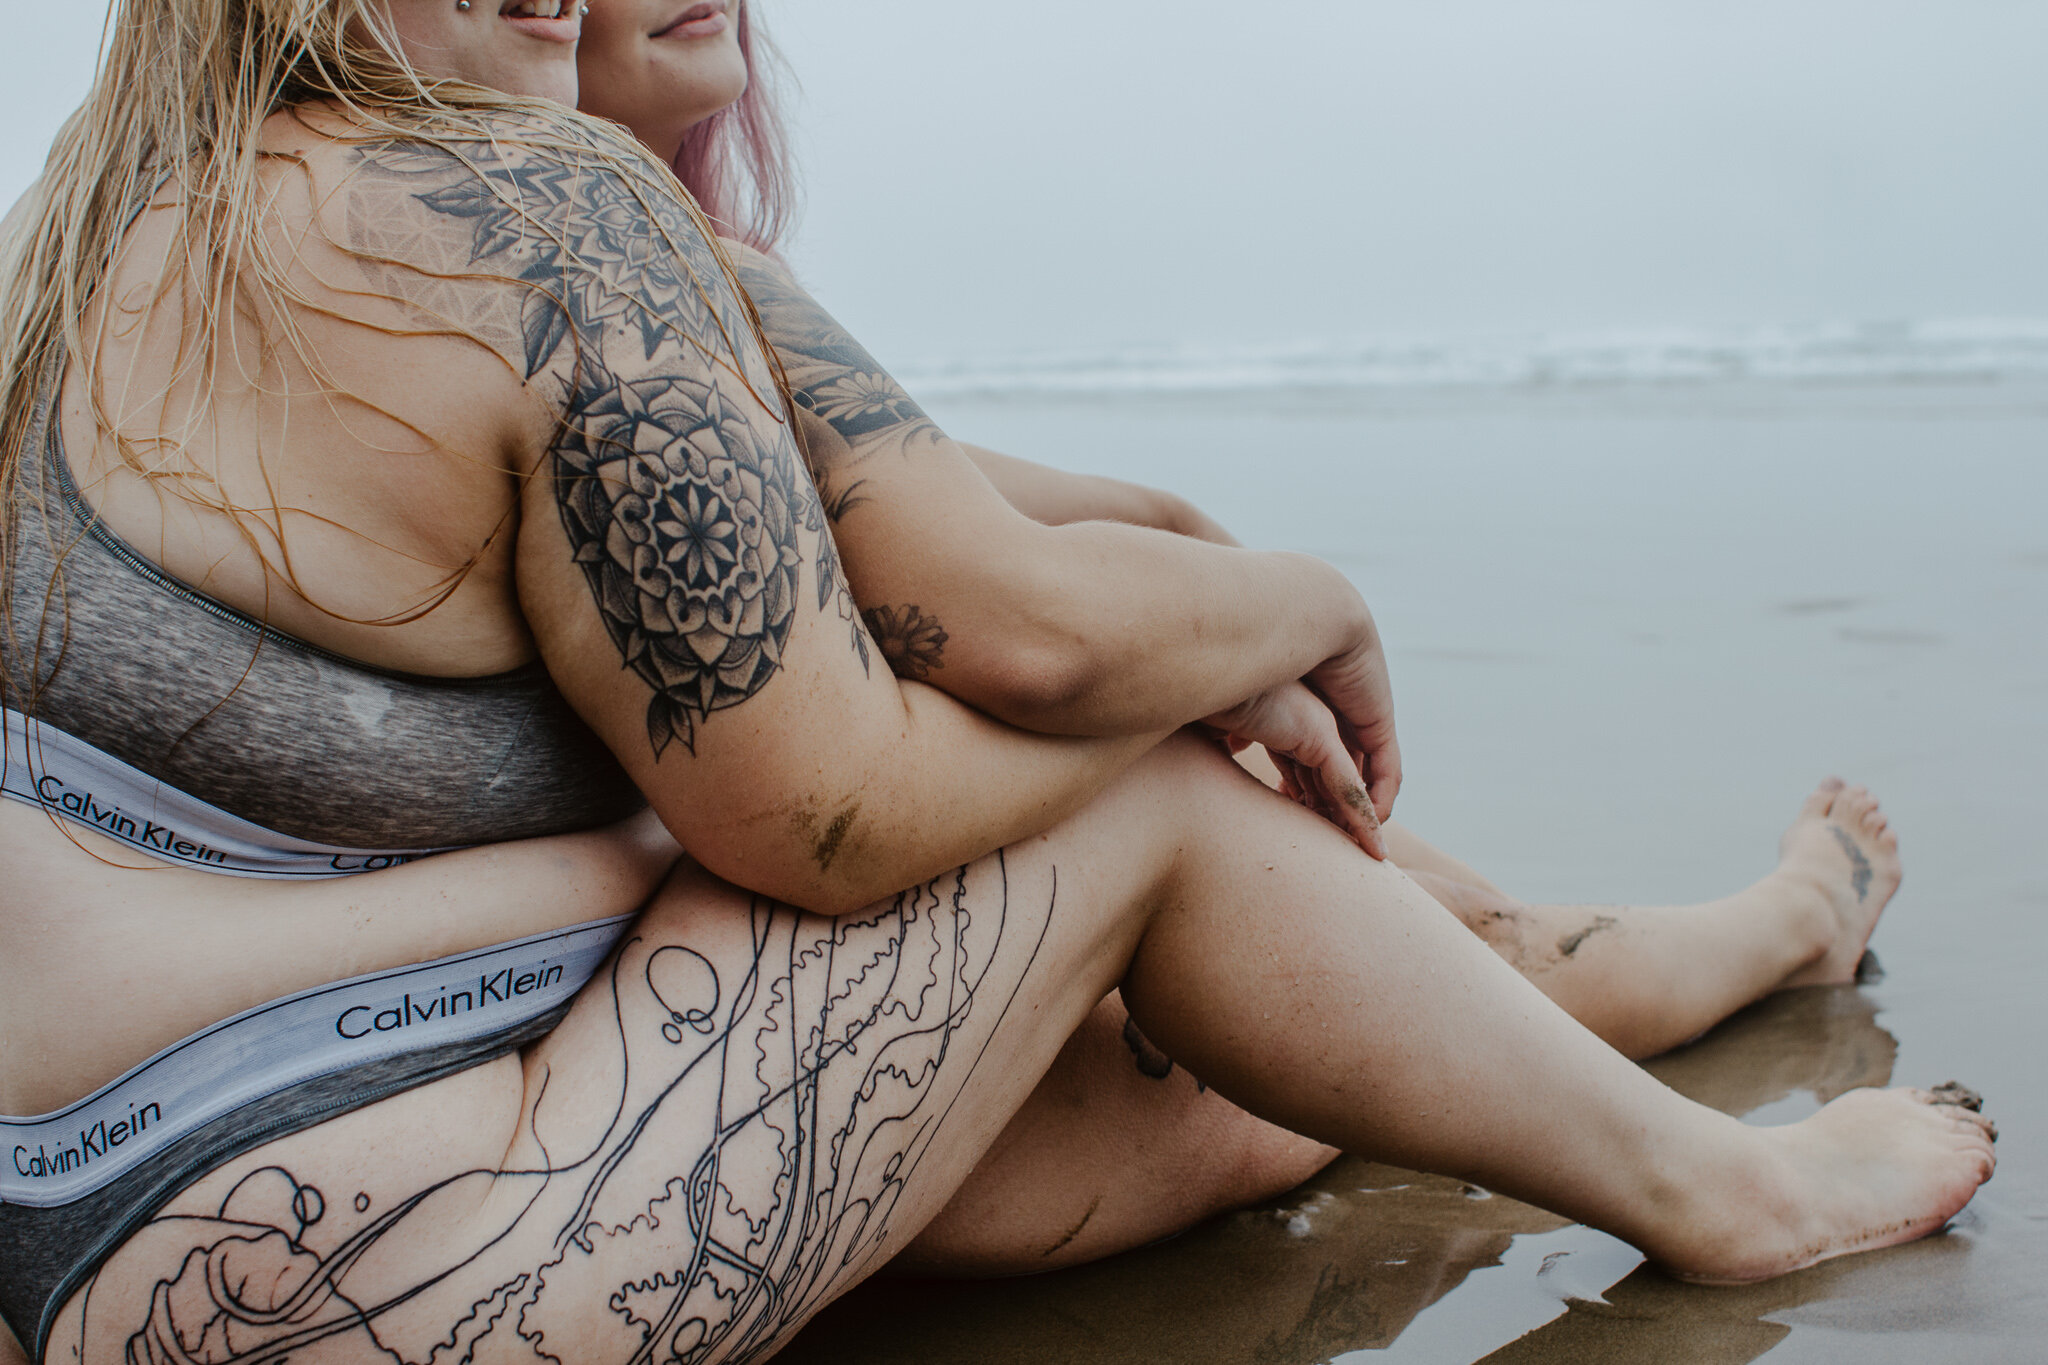 Tattooed lesbian couple at beach